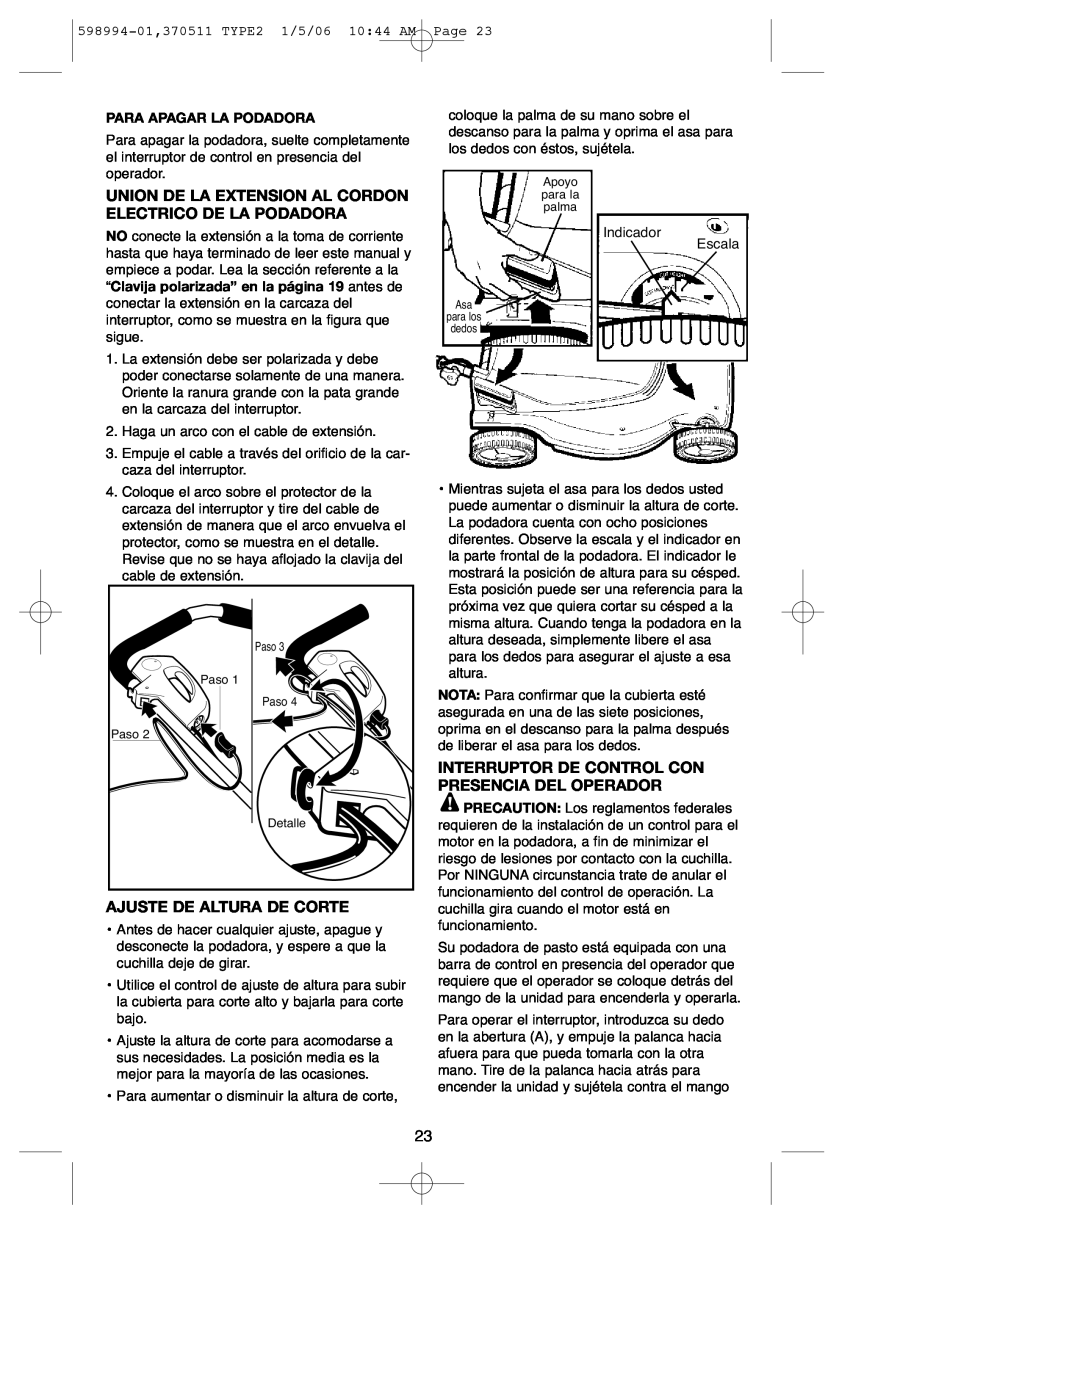 DeWalt 900.370511 instruction manual Union De La Extension Al Cordon Electrico De La Podadora, Ajuste De Altura De Corte 